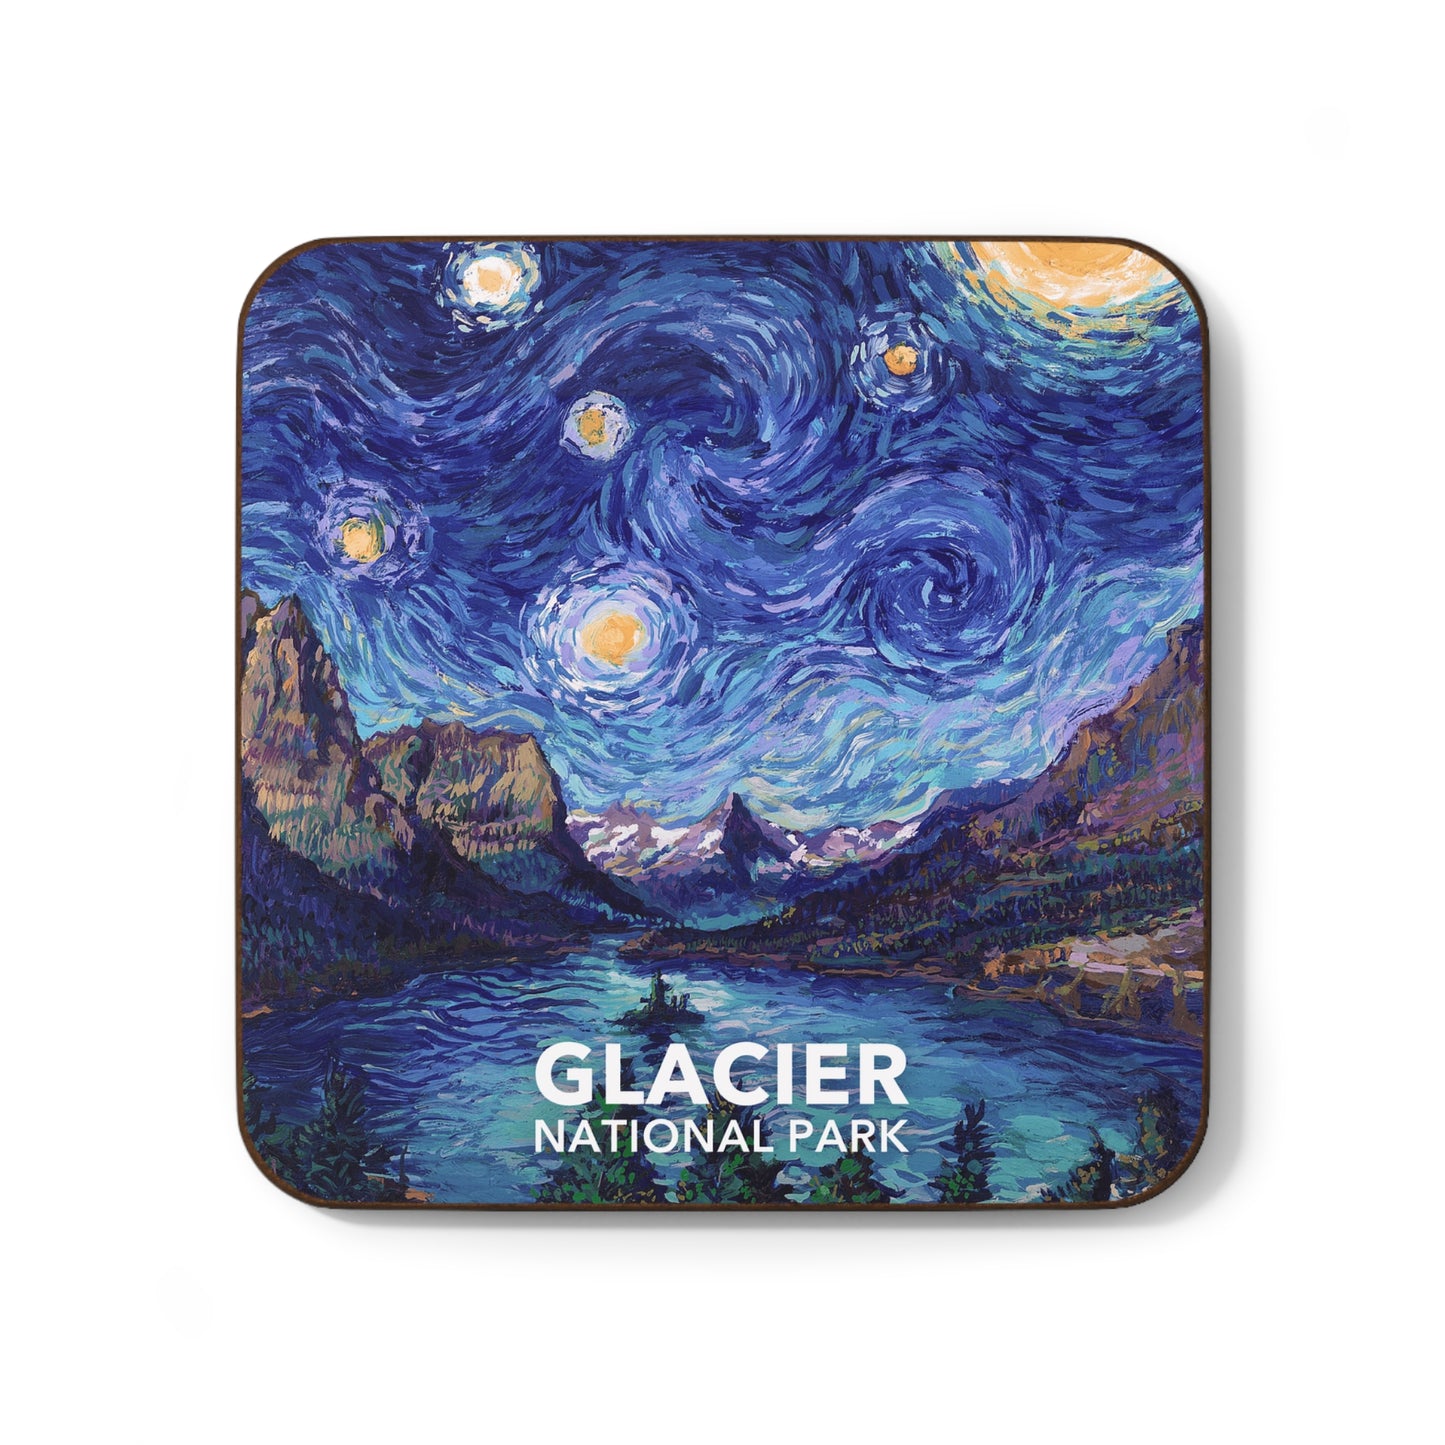 Glacier National Park Coaster - The Starry Night